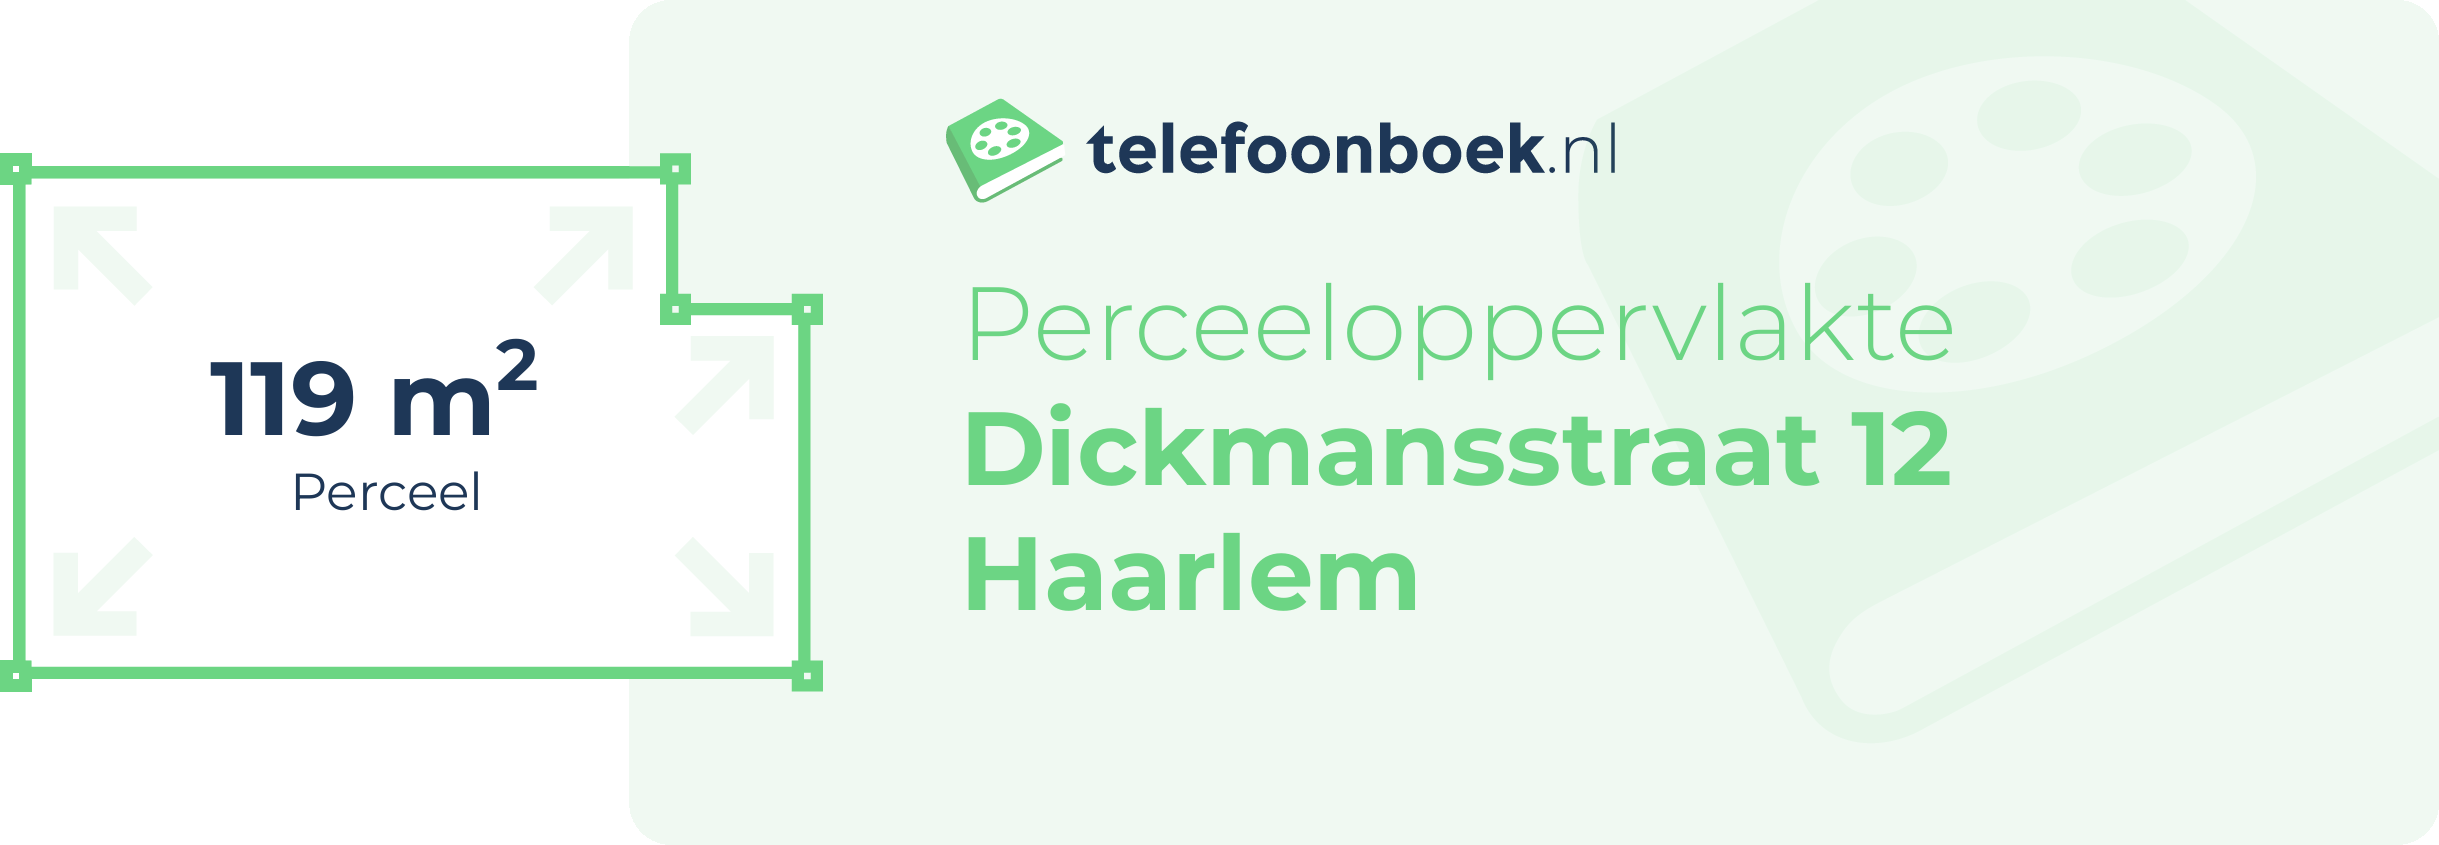 Perceeloppervlakte Dickmansstraat 12 Haarlem